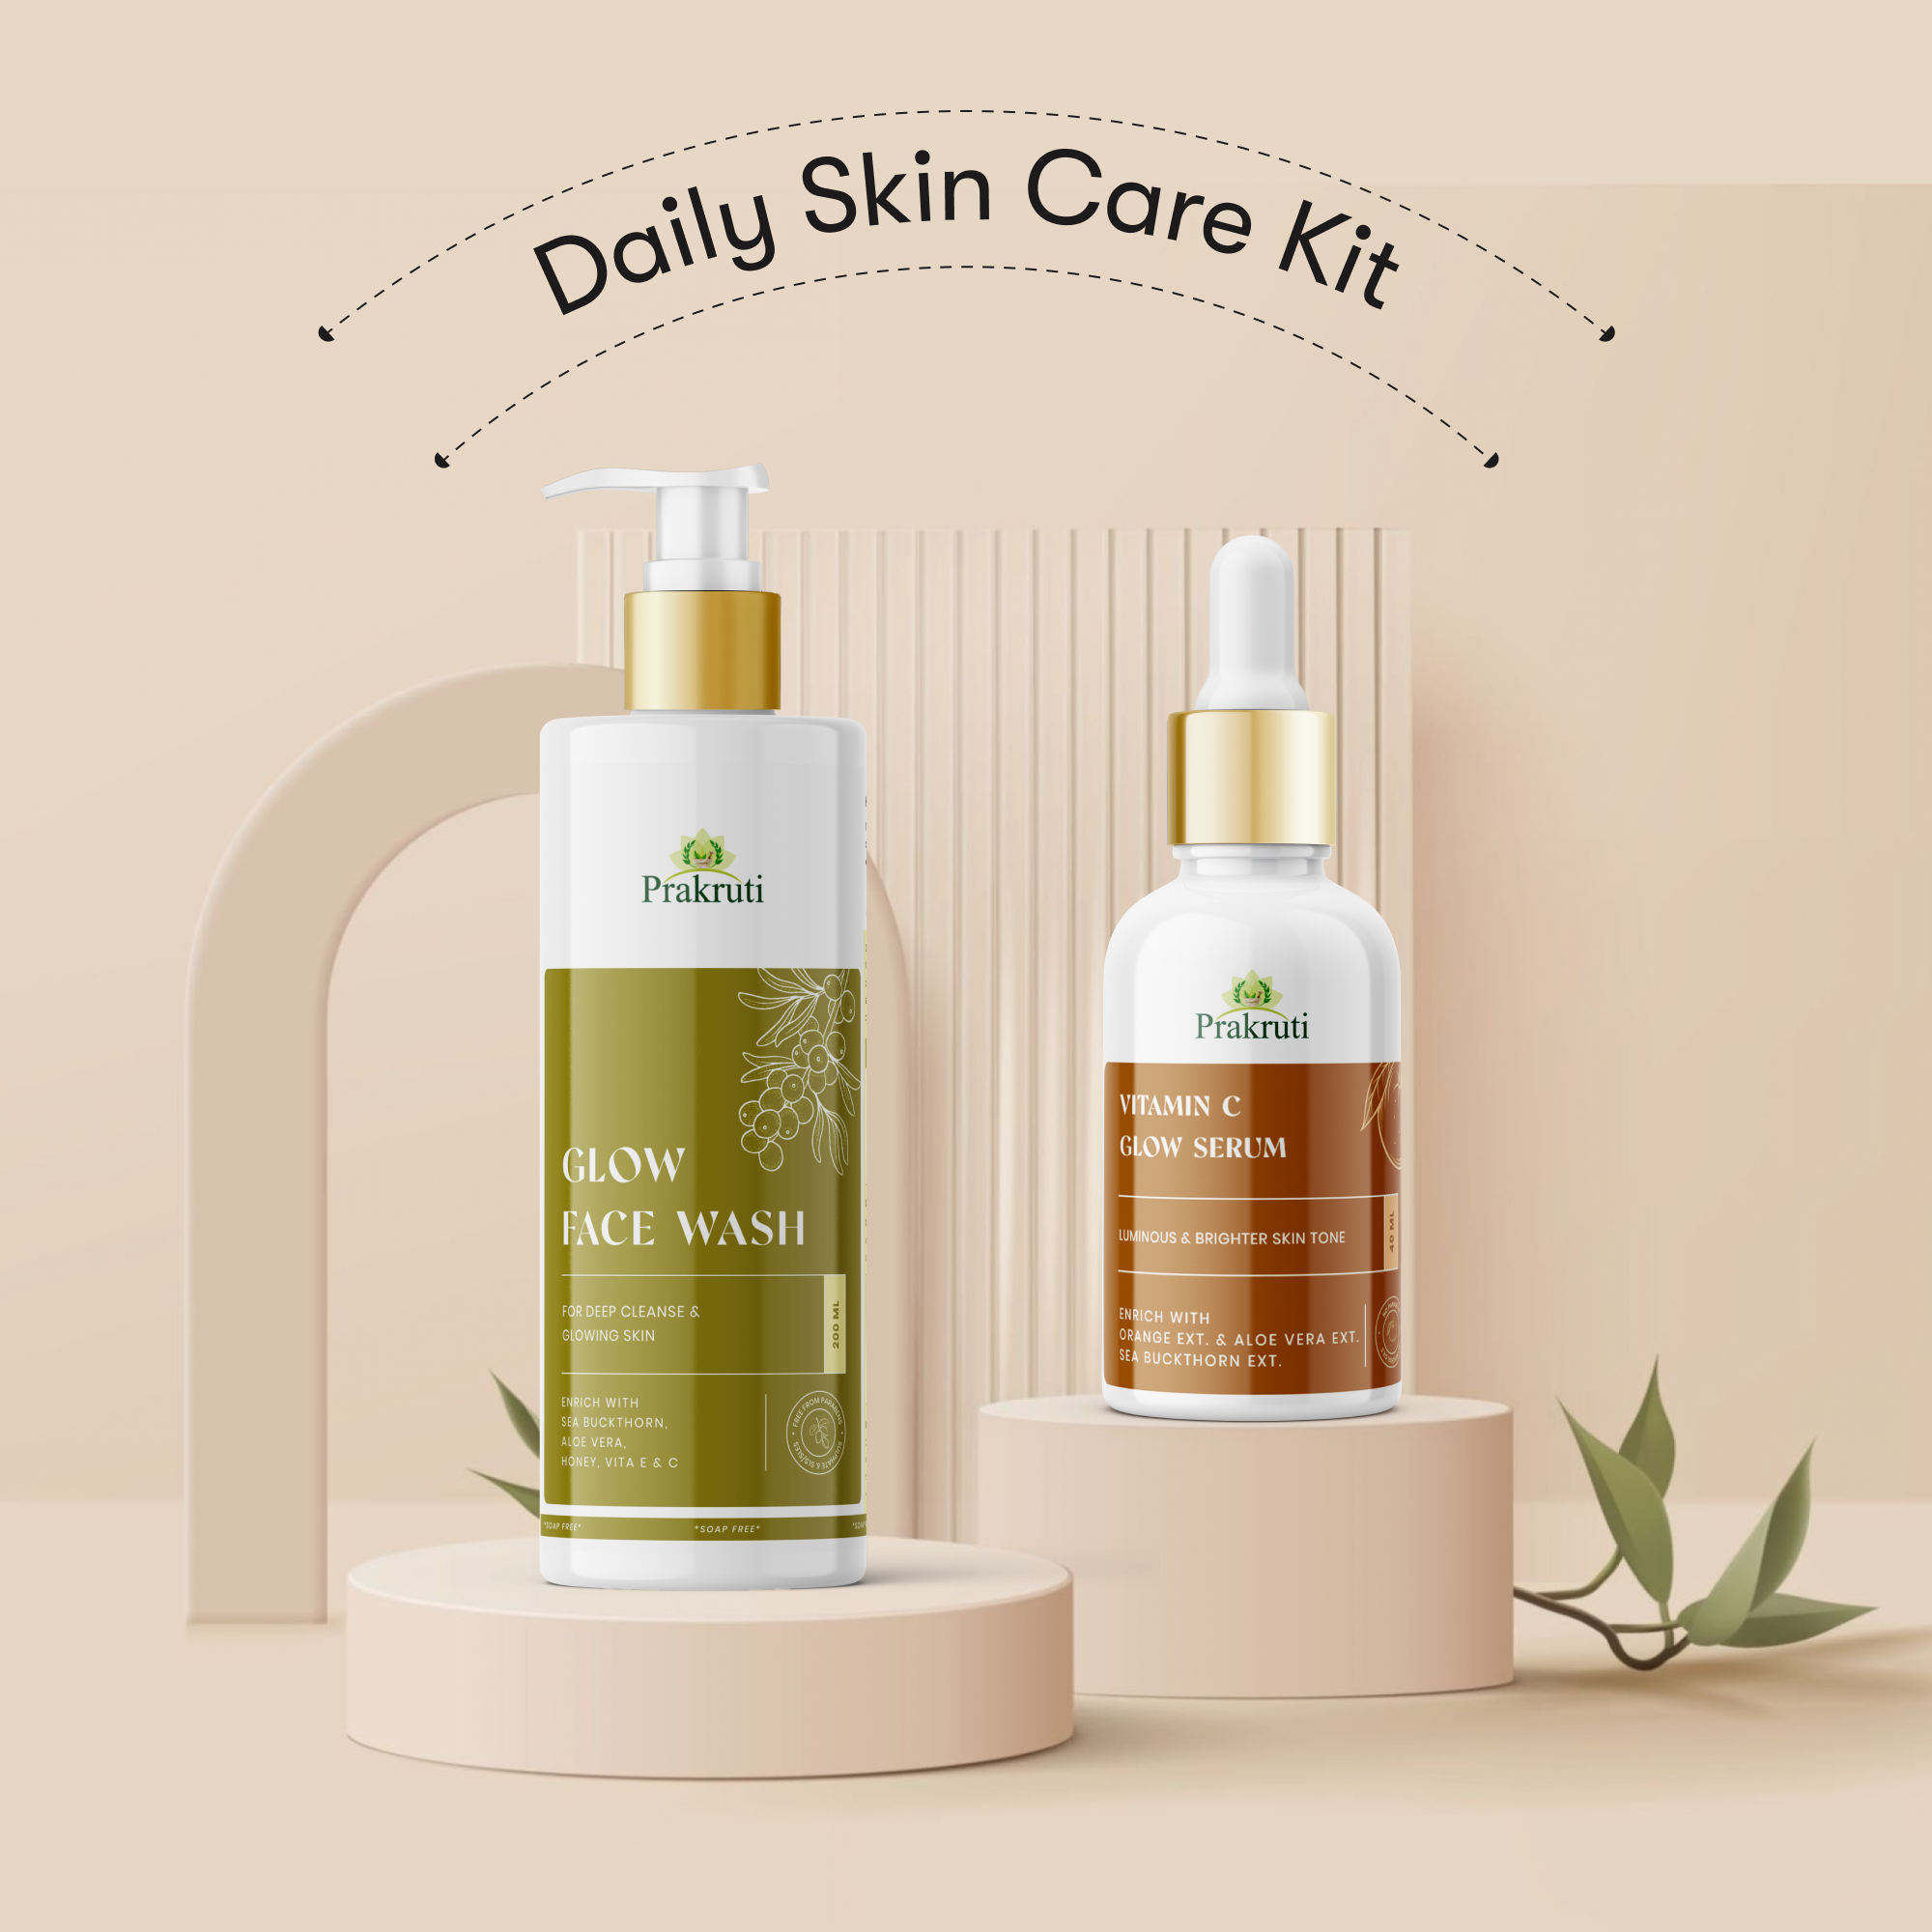 Daily Skin Care Kit